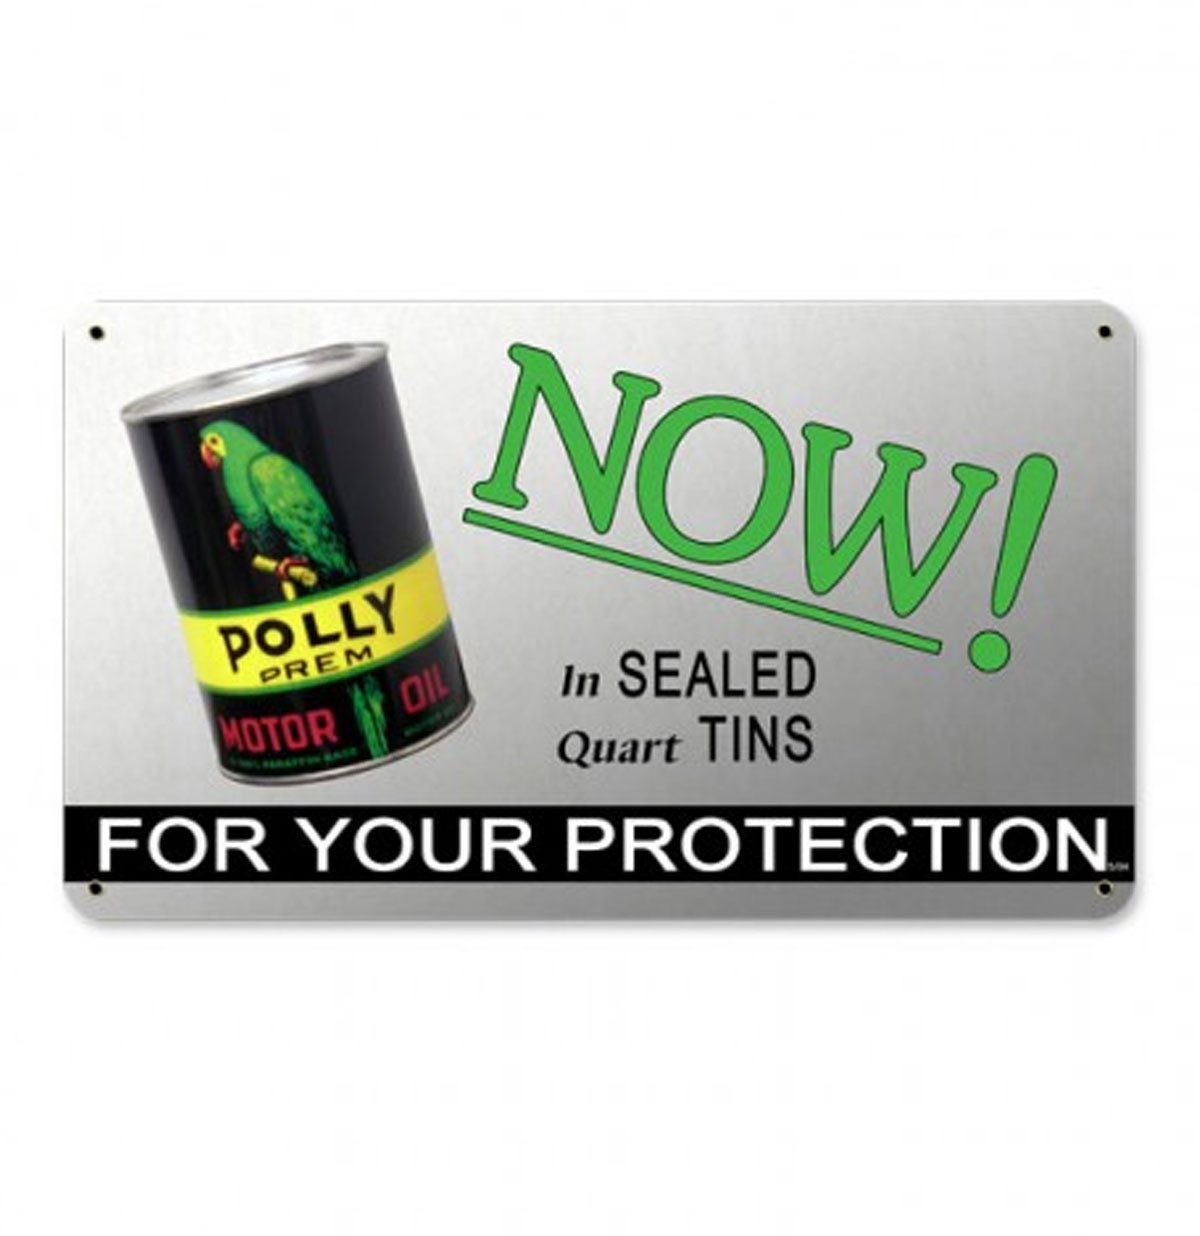 Polly Premium Motor Oil Now In Sealed Quart Tins Zwaar Metalen Bord 34 x 20 cm